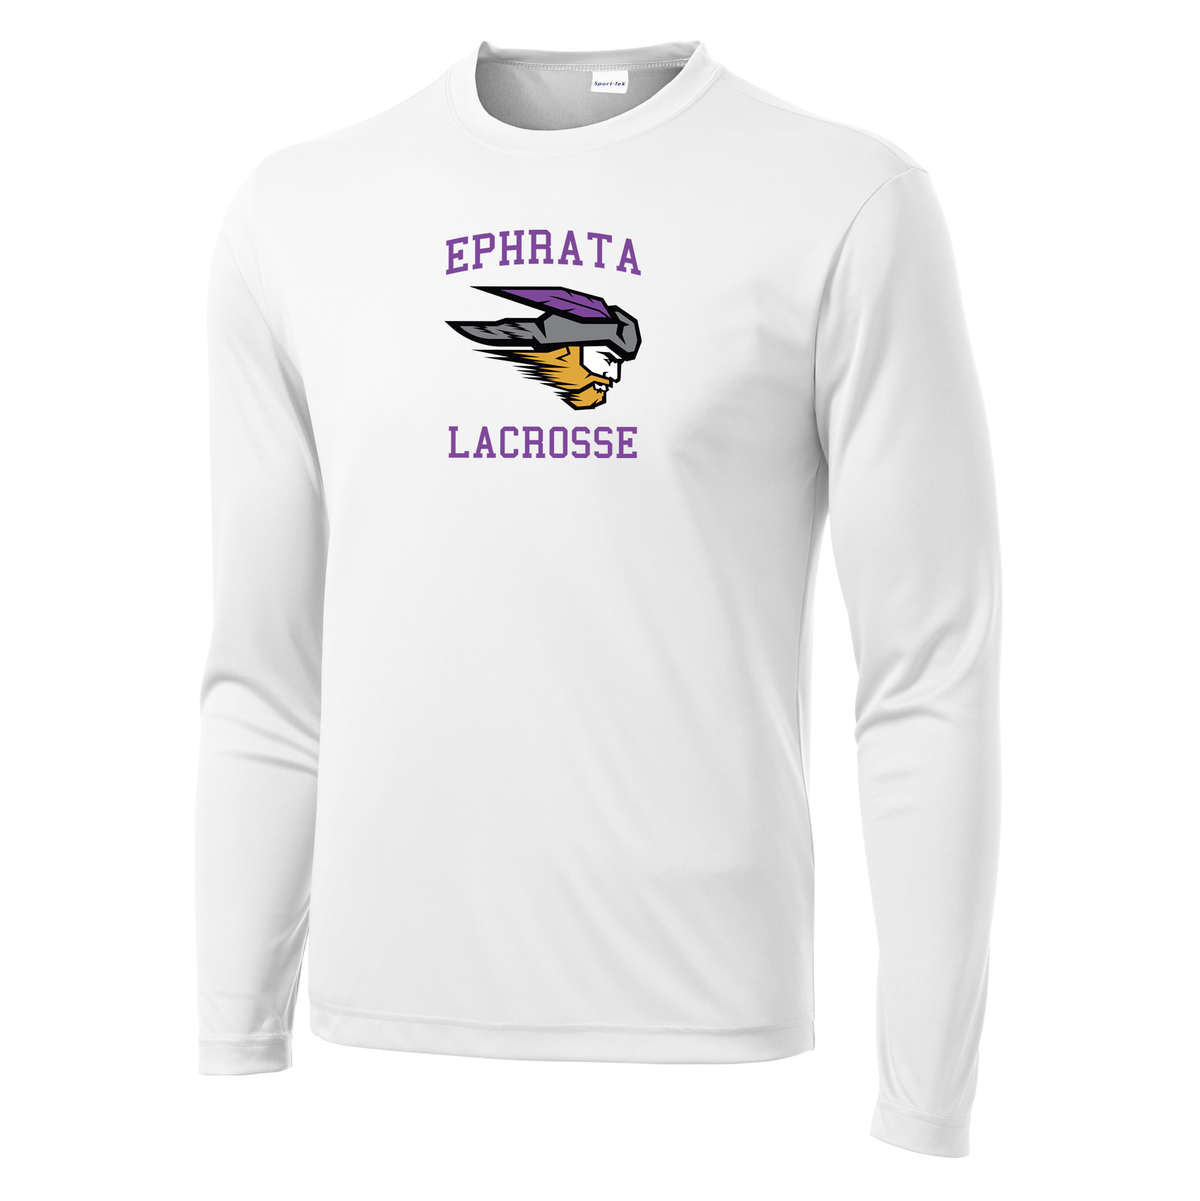 Ephrata Lacrosse Long Sleeve Performance Shirt